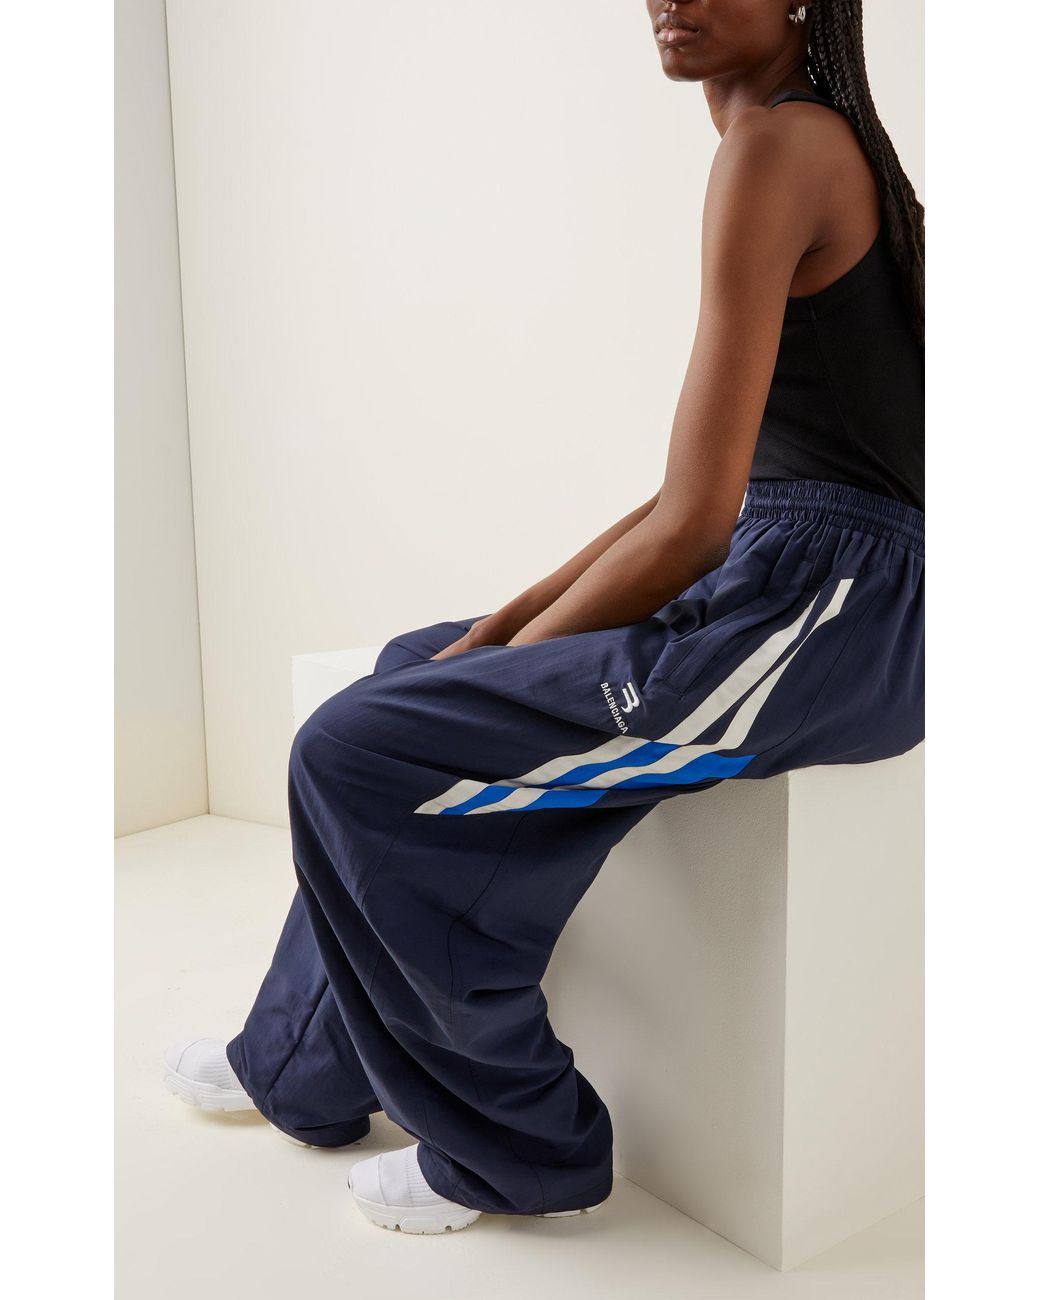 BALENCIAGA pants for woman  Black  Balenciaga pants 595066 TYI20 online  on GIGLIOCOM